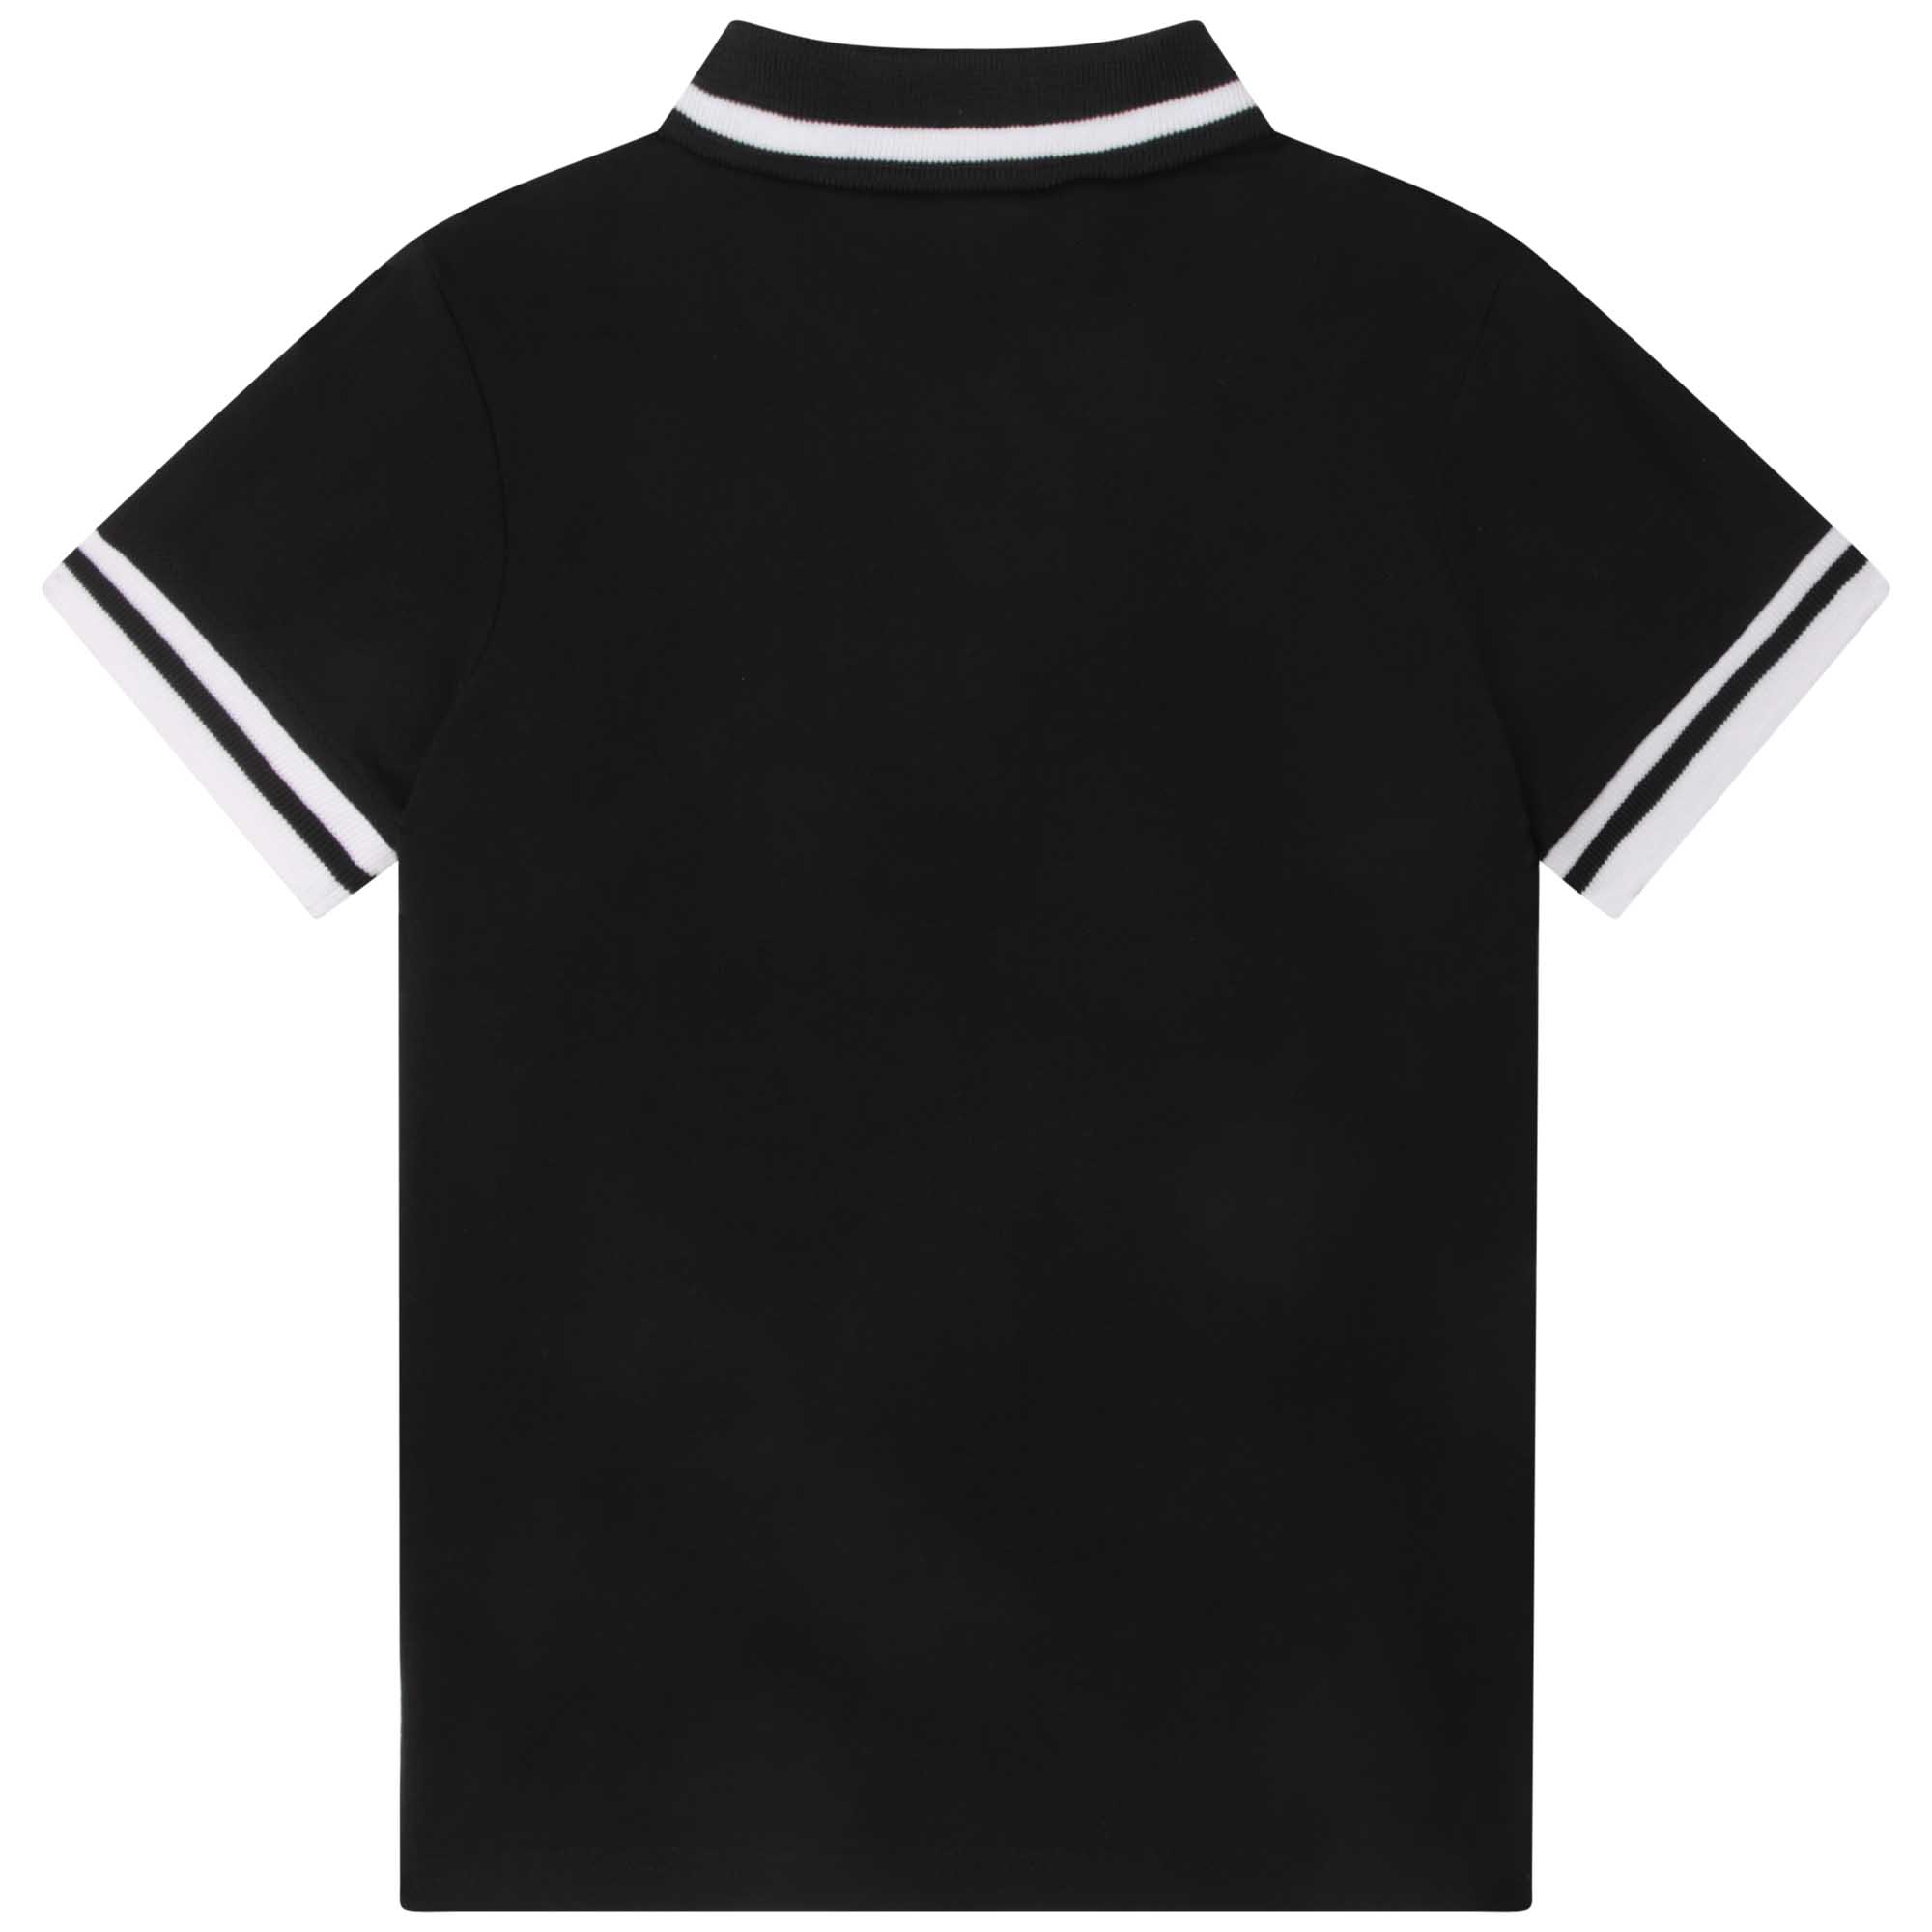 Cotton polo shirt DKNY for BOY